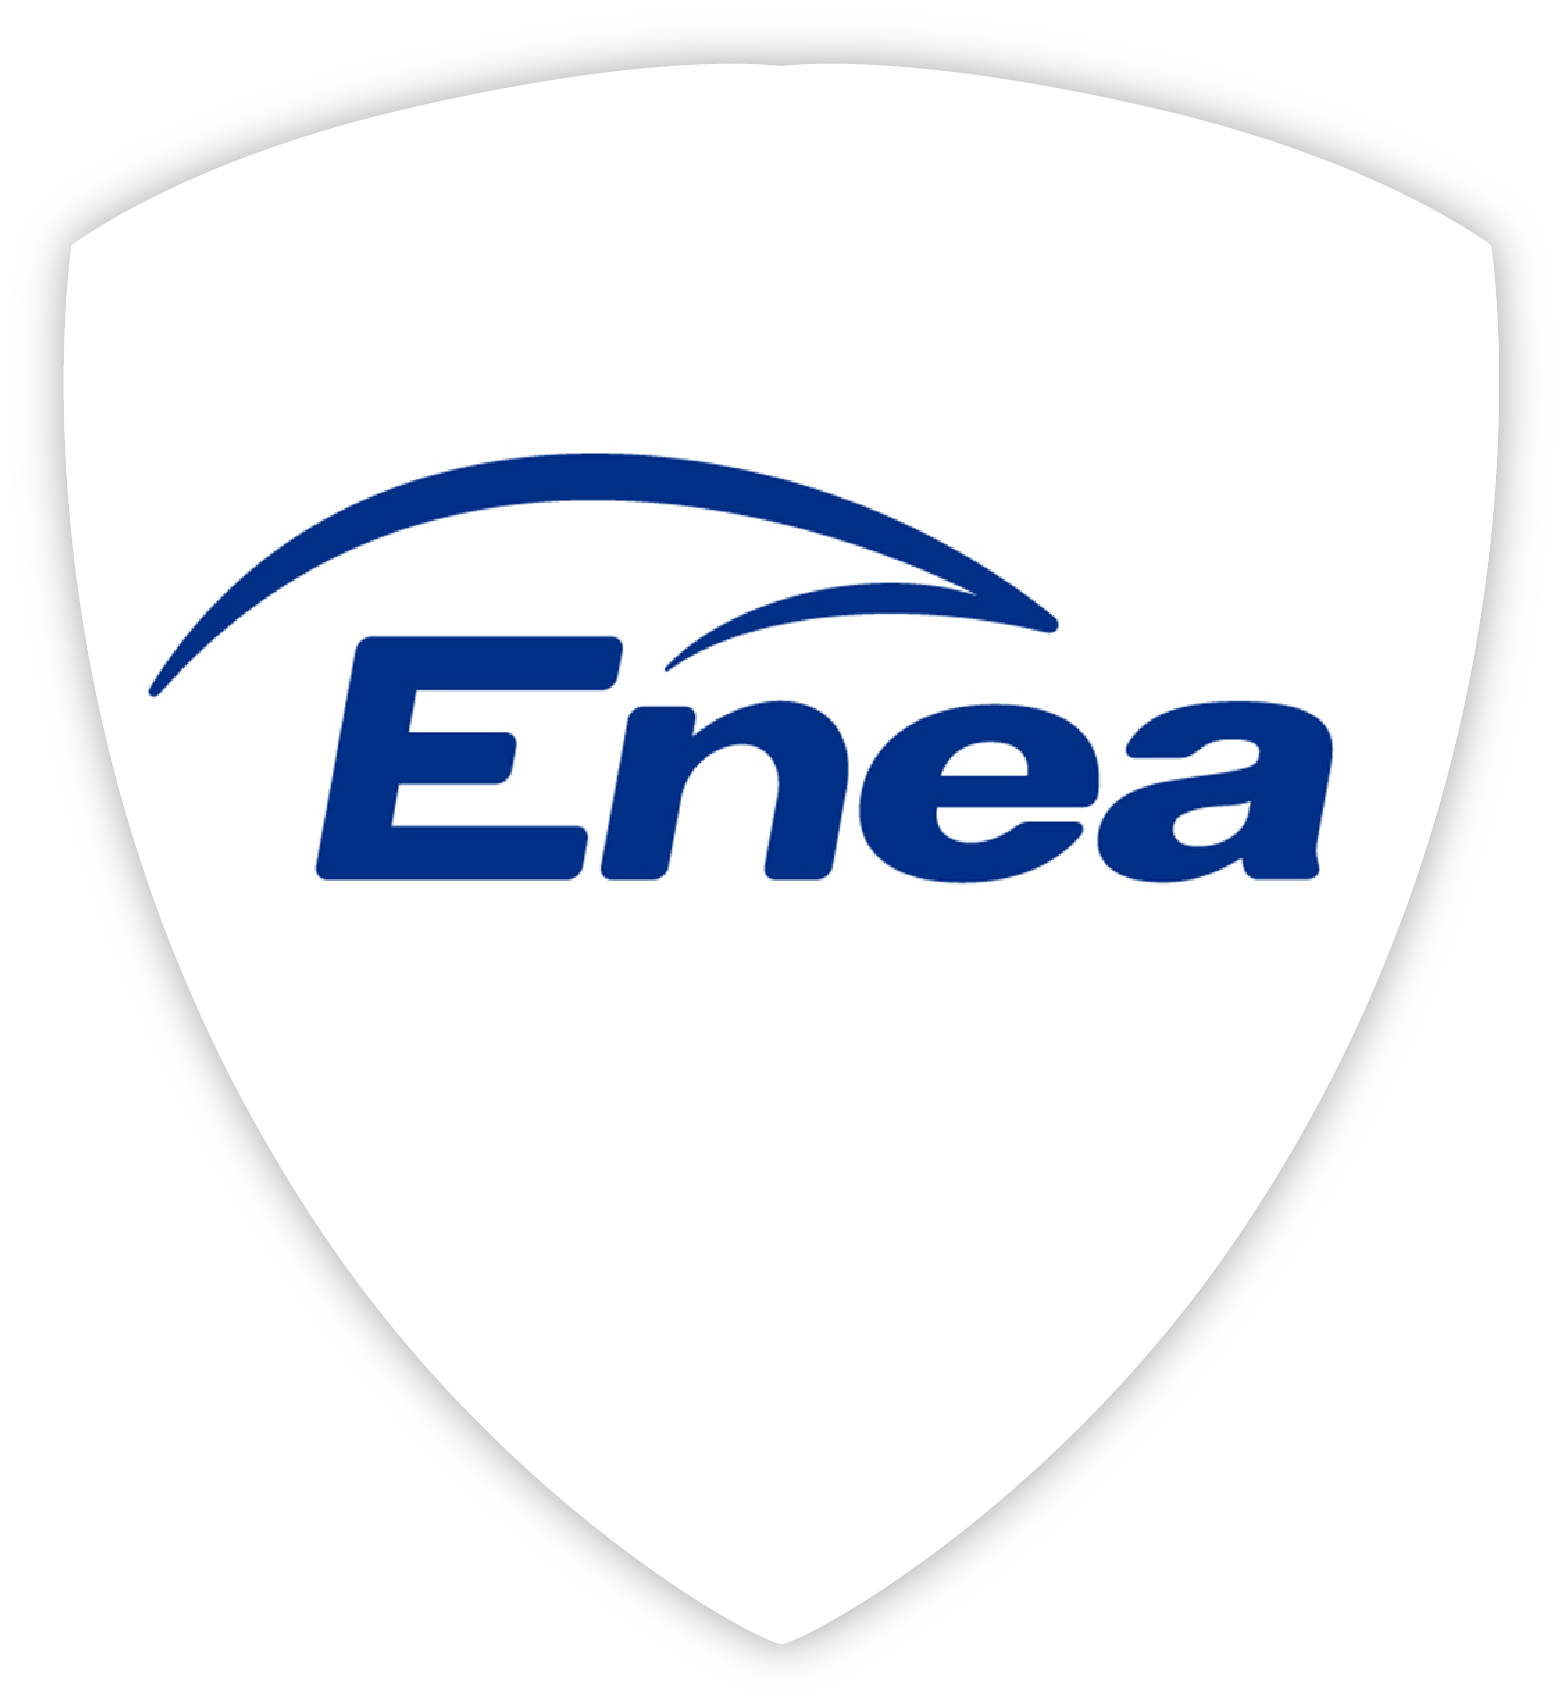 Enea Operator